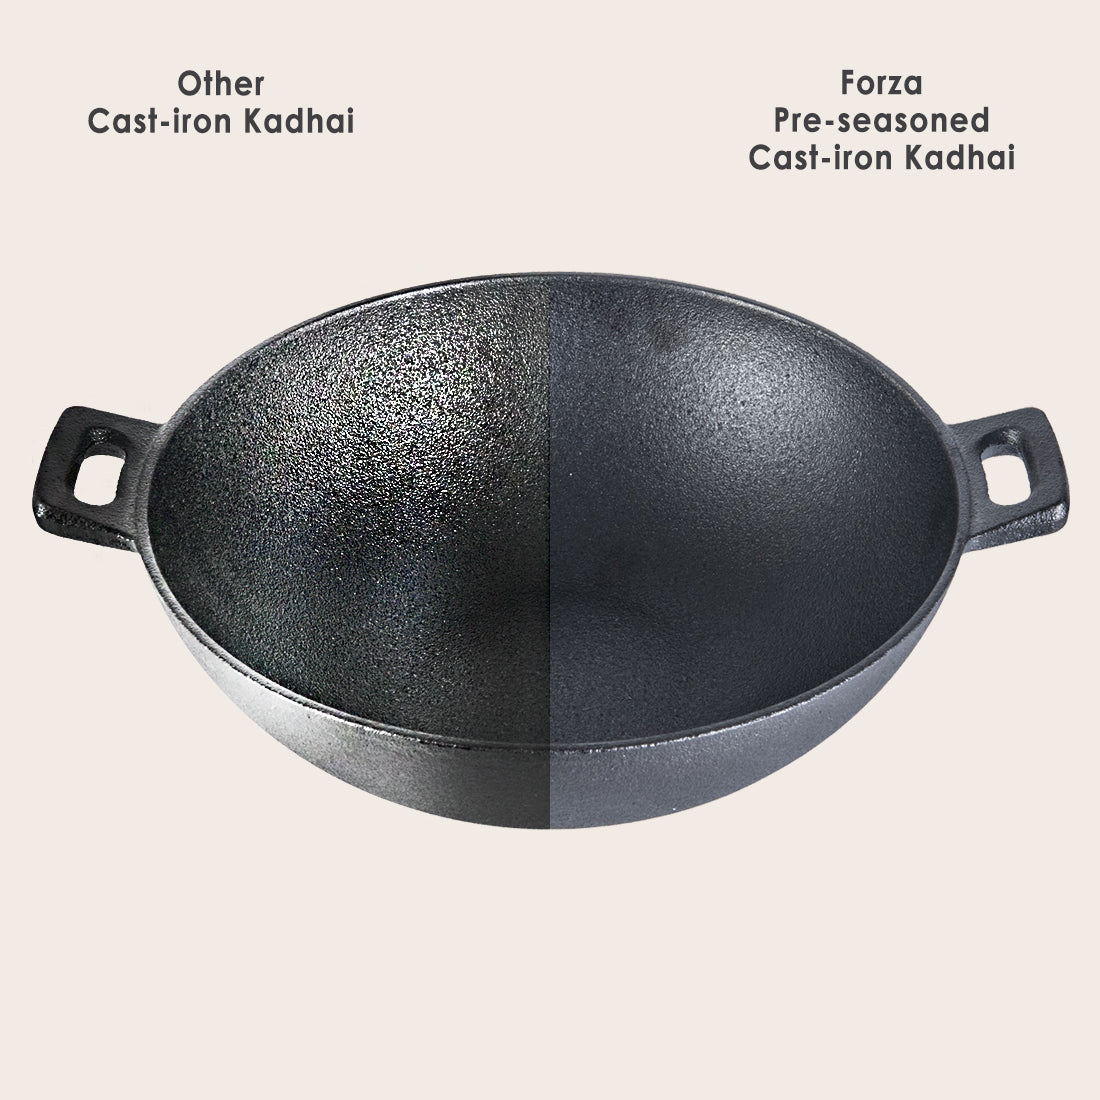 Forza 24 cm Cast-iron Kadhai, Pre-Seasoned Cookware, Induction Friendly, 1.9L, 3.8mm